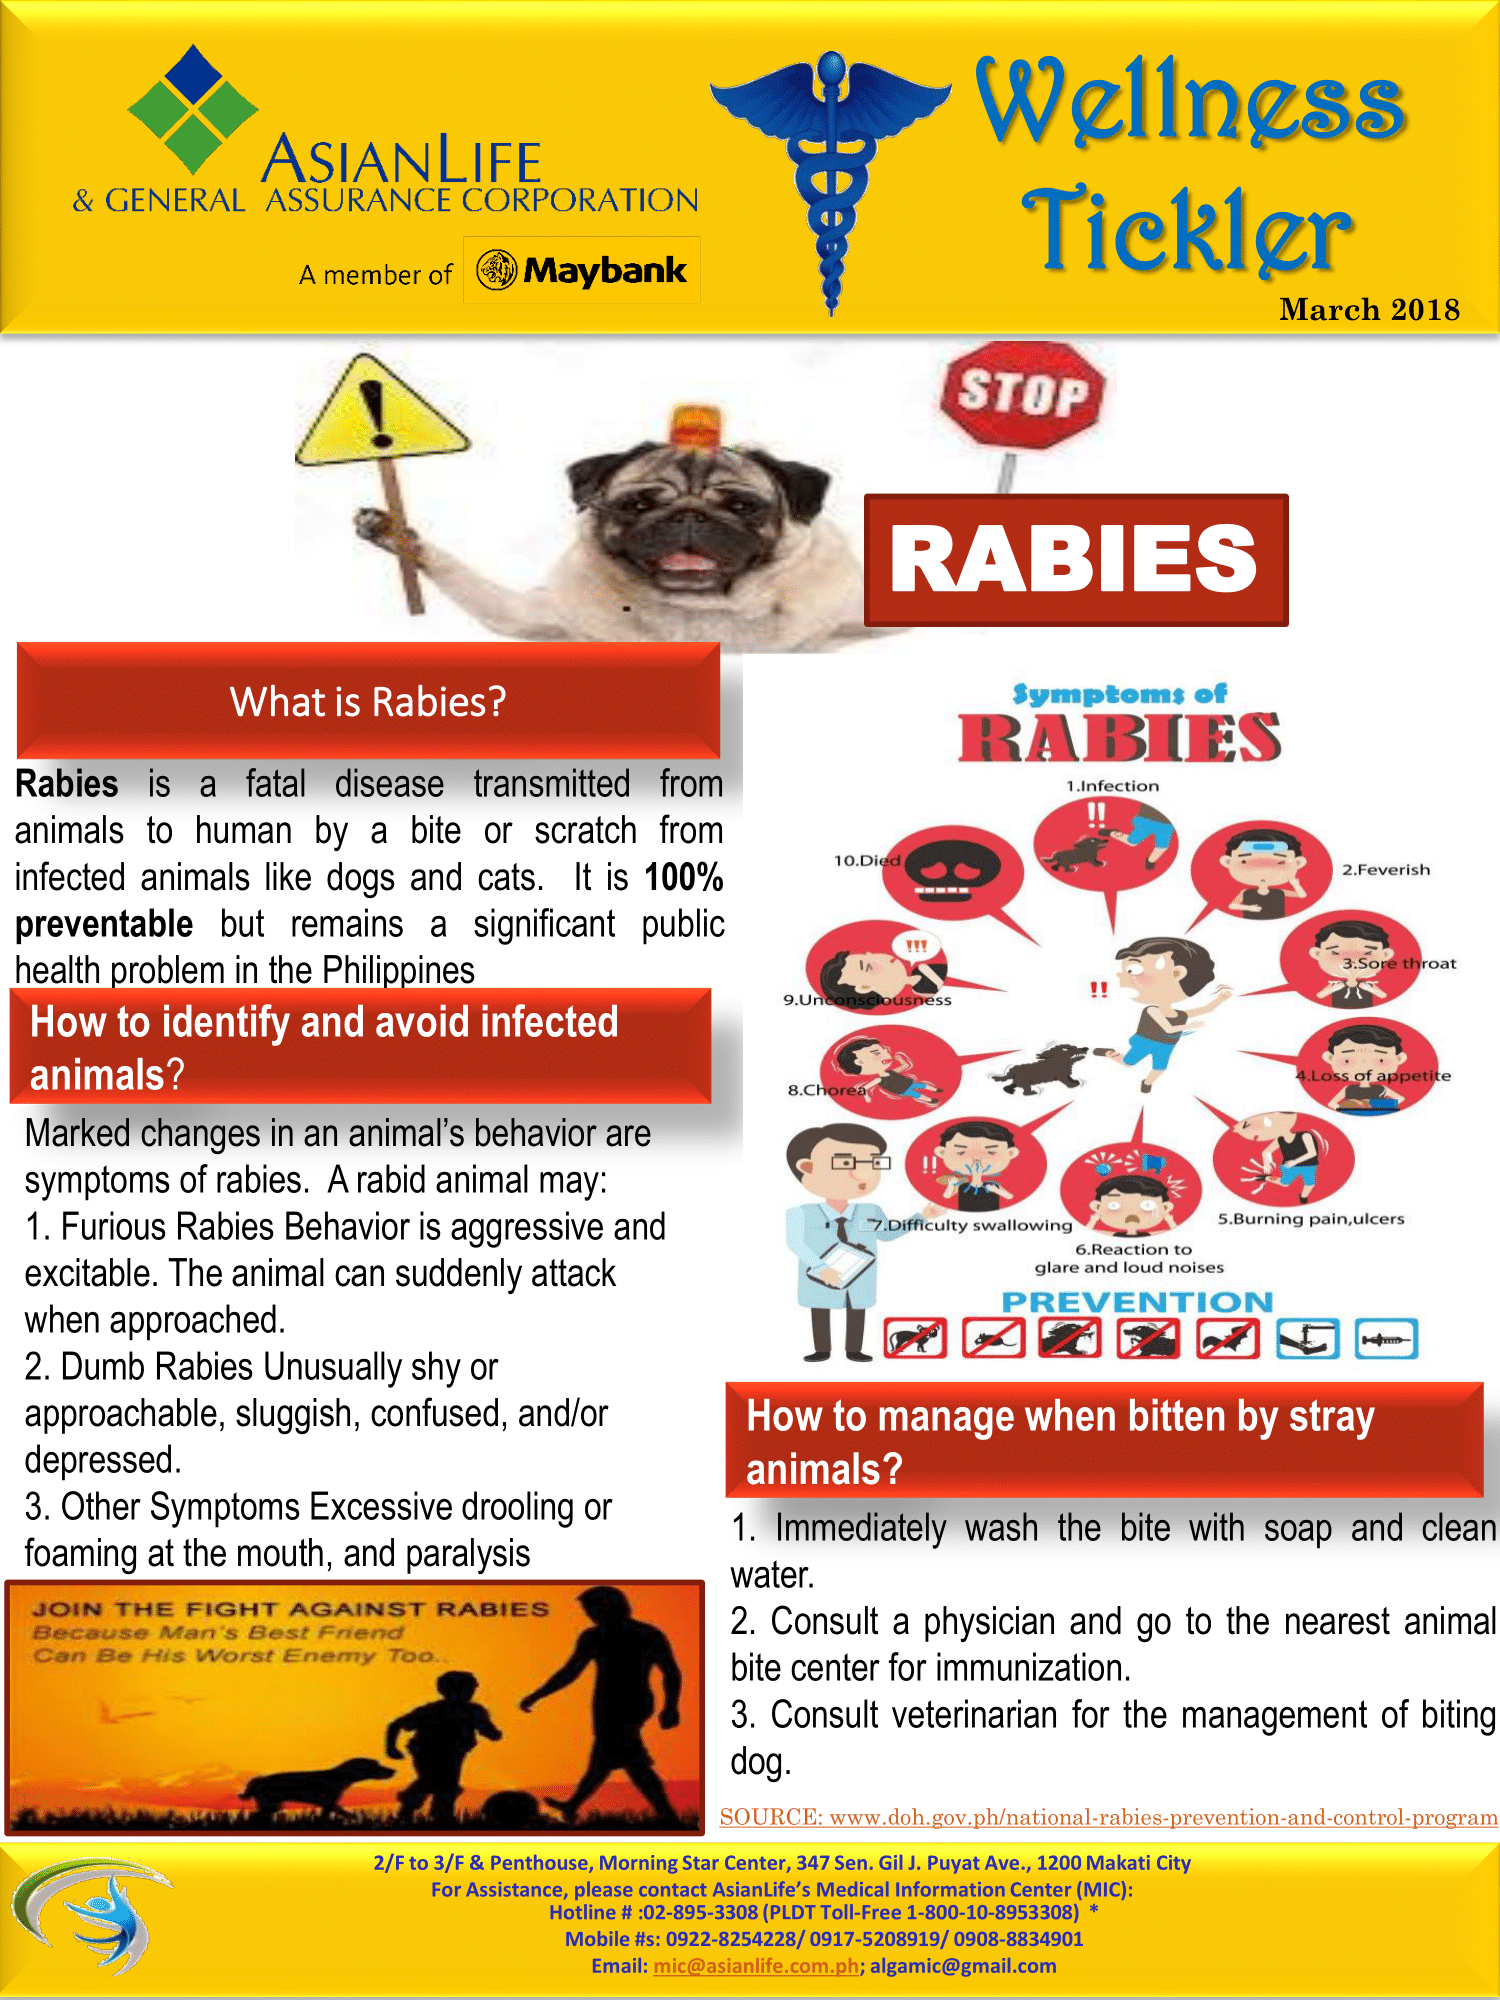 Etiqa Philippines Wellness Tickler March 2018: Rabies - News Room - Etiqa  Life & General Assurance Philippines, Inc.